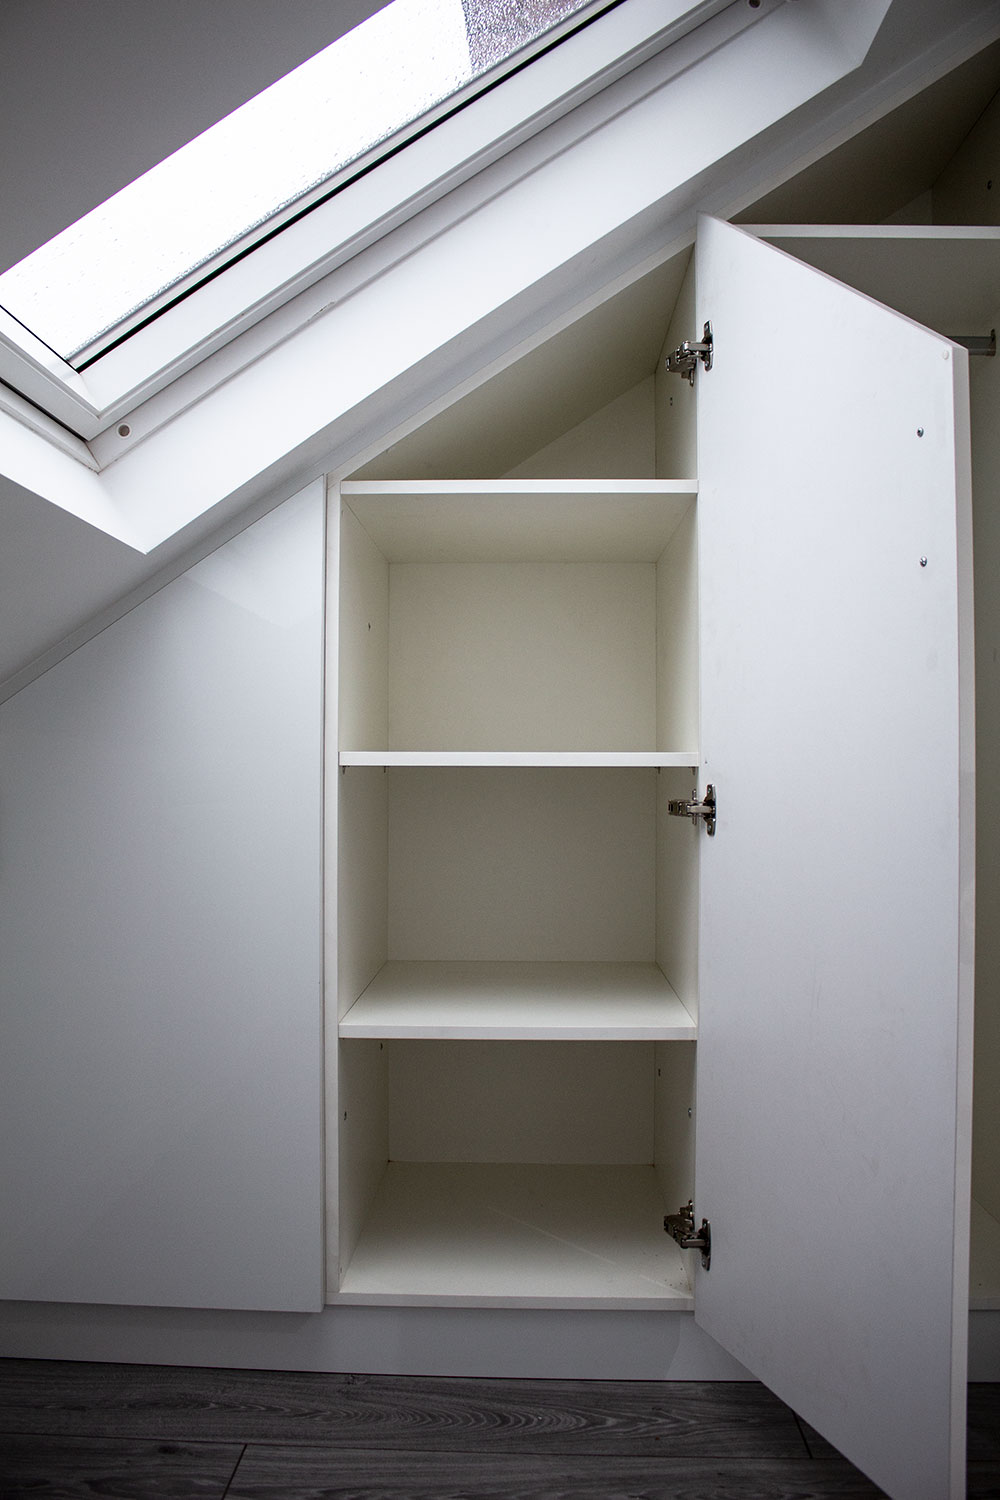 Fitted loft wardrobe with open door, revealing shelves